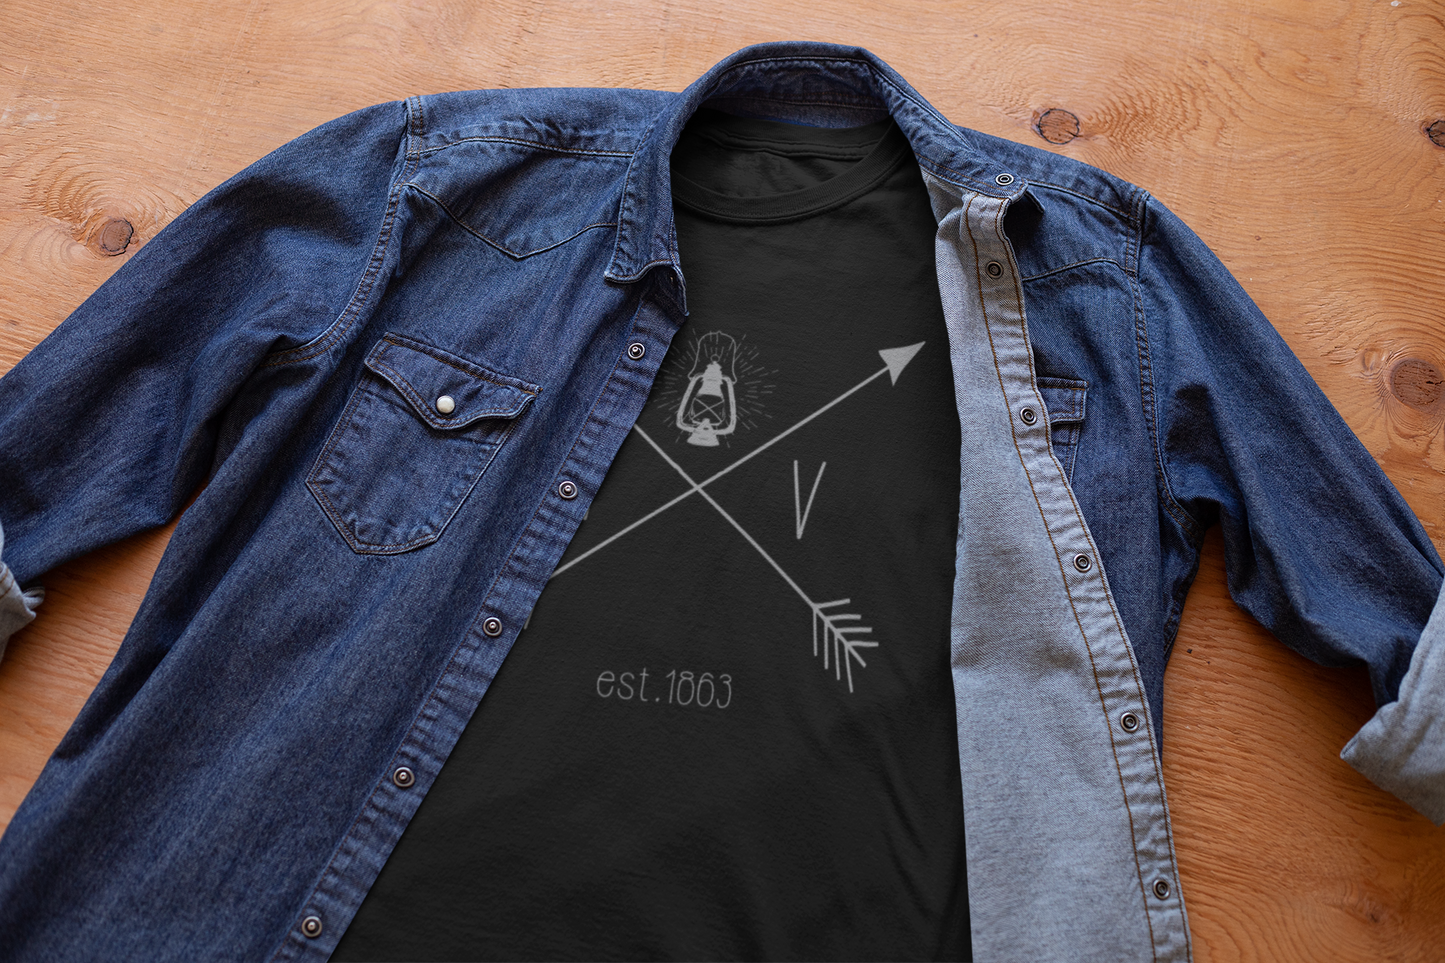 WV Crossed Arrow Shirt